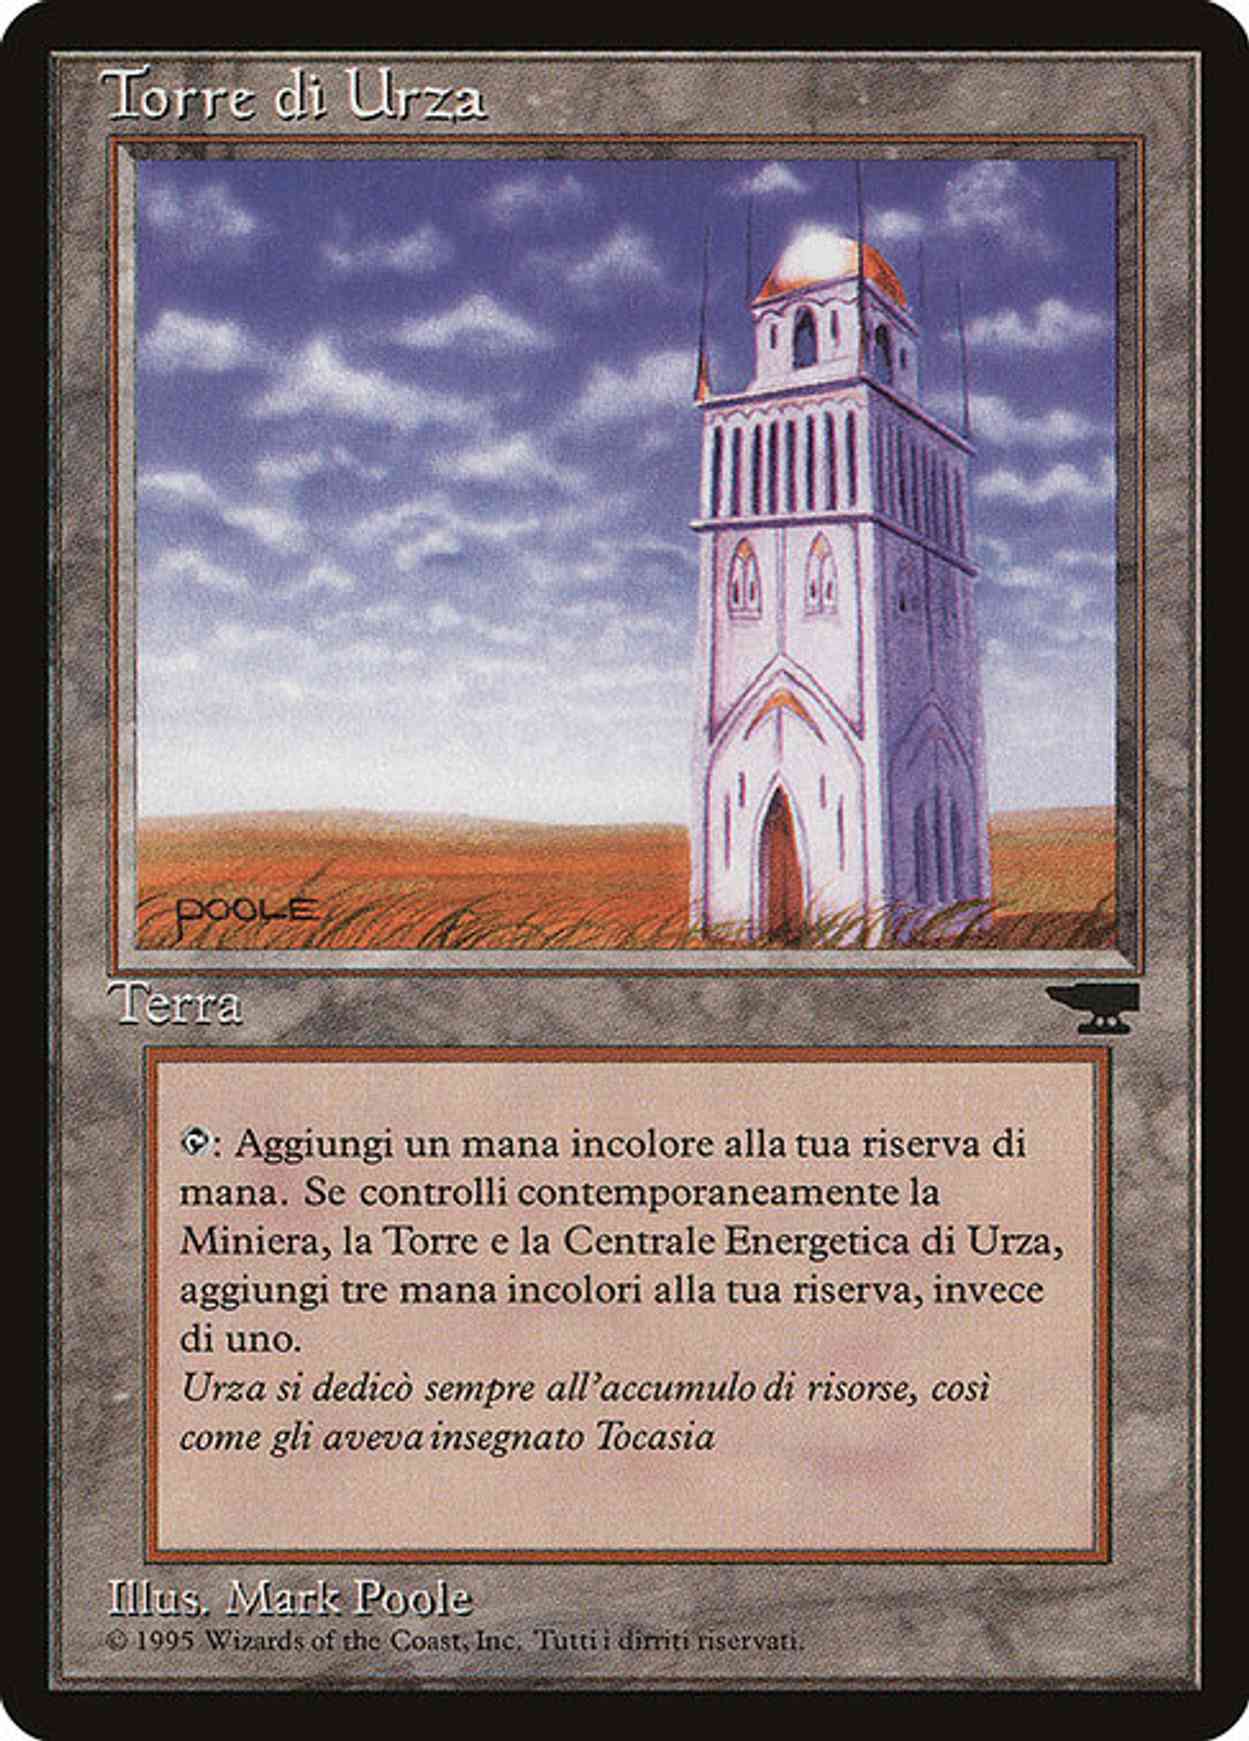 Urza's Tower (Plains) (Italian) - "Torre di Urza" magic card front